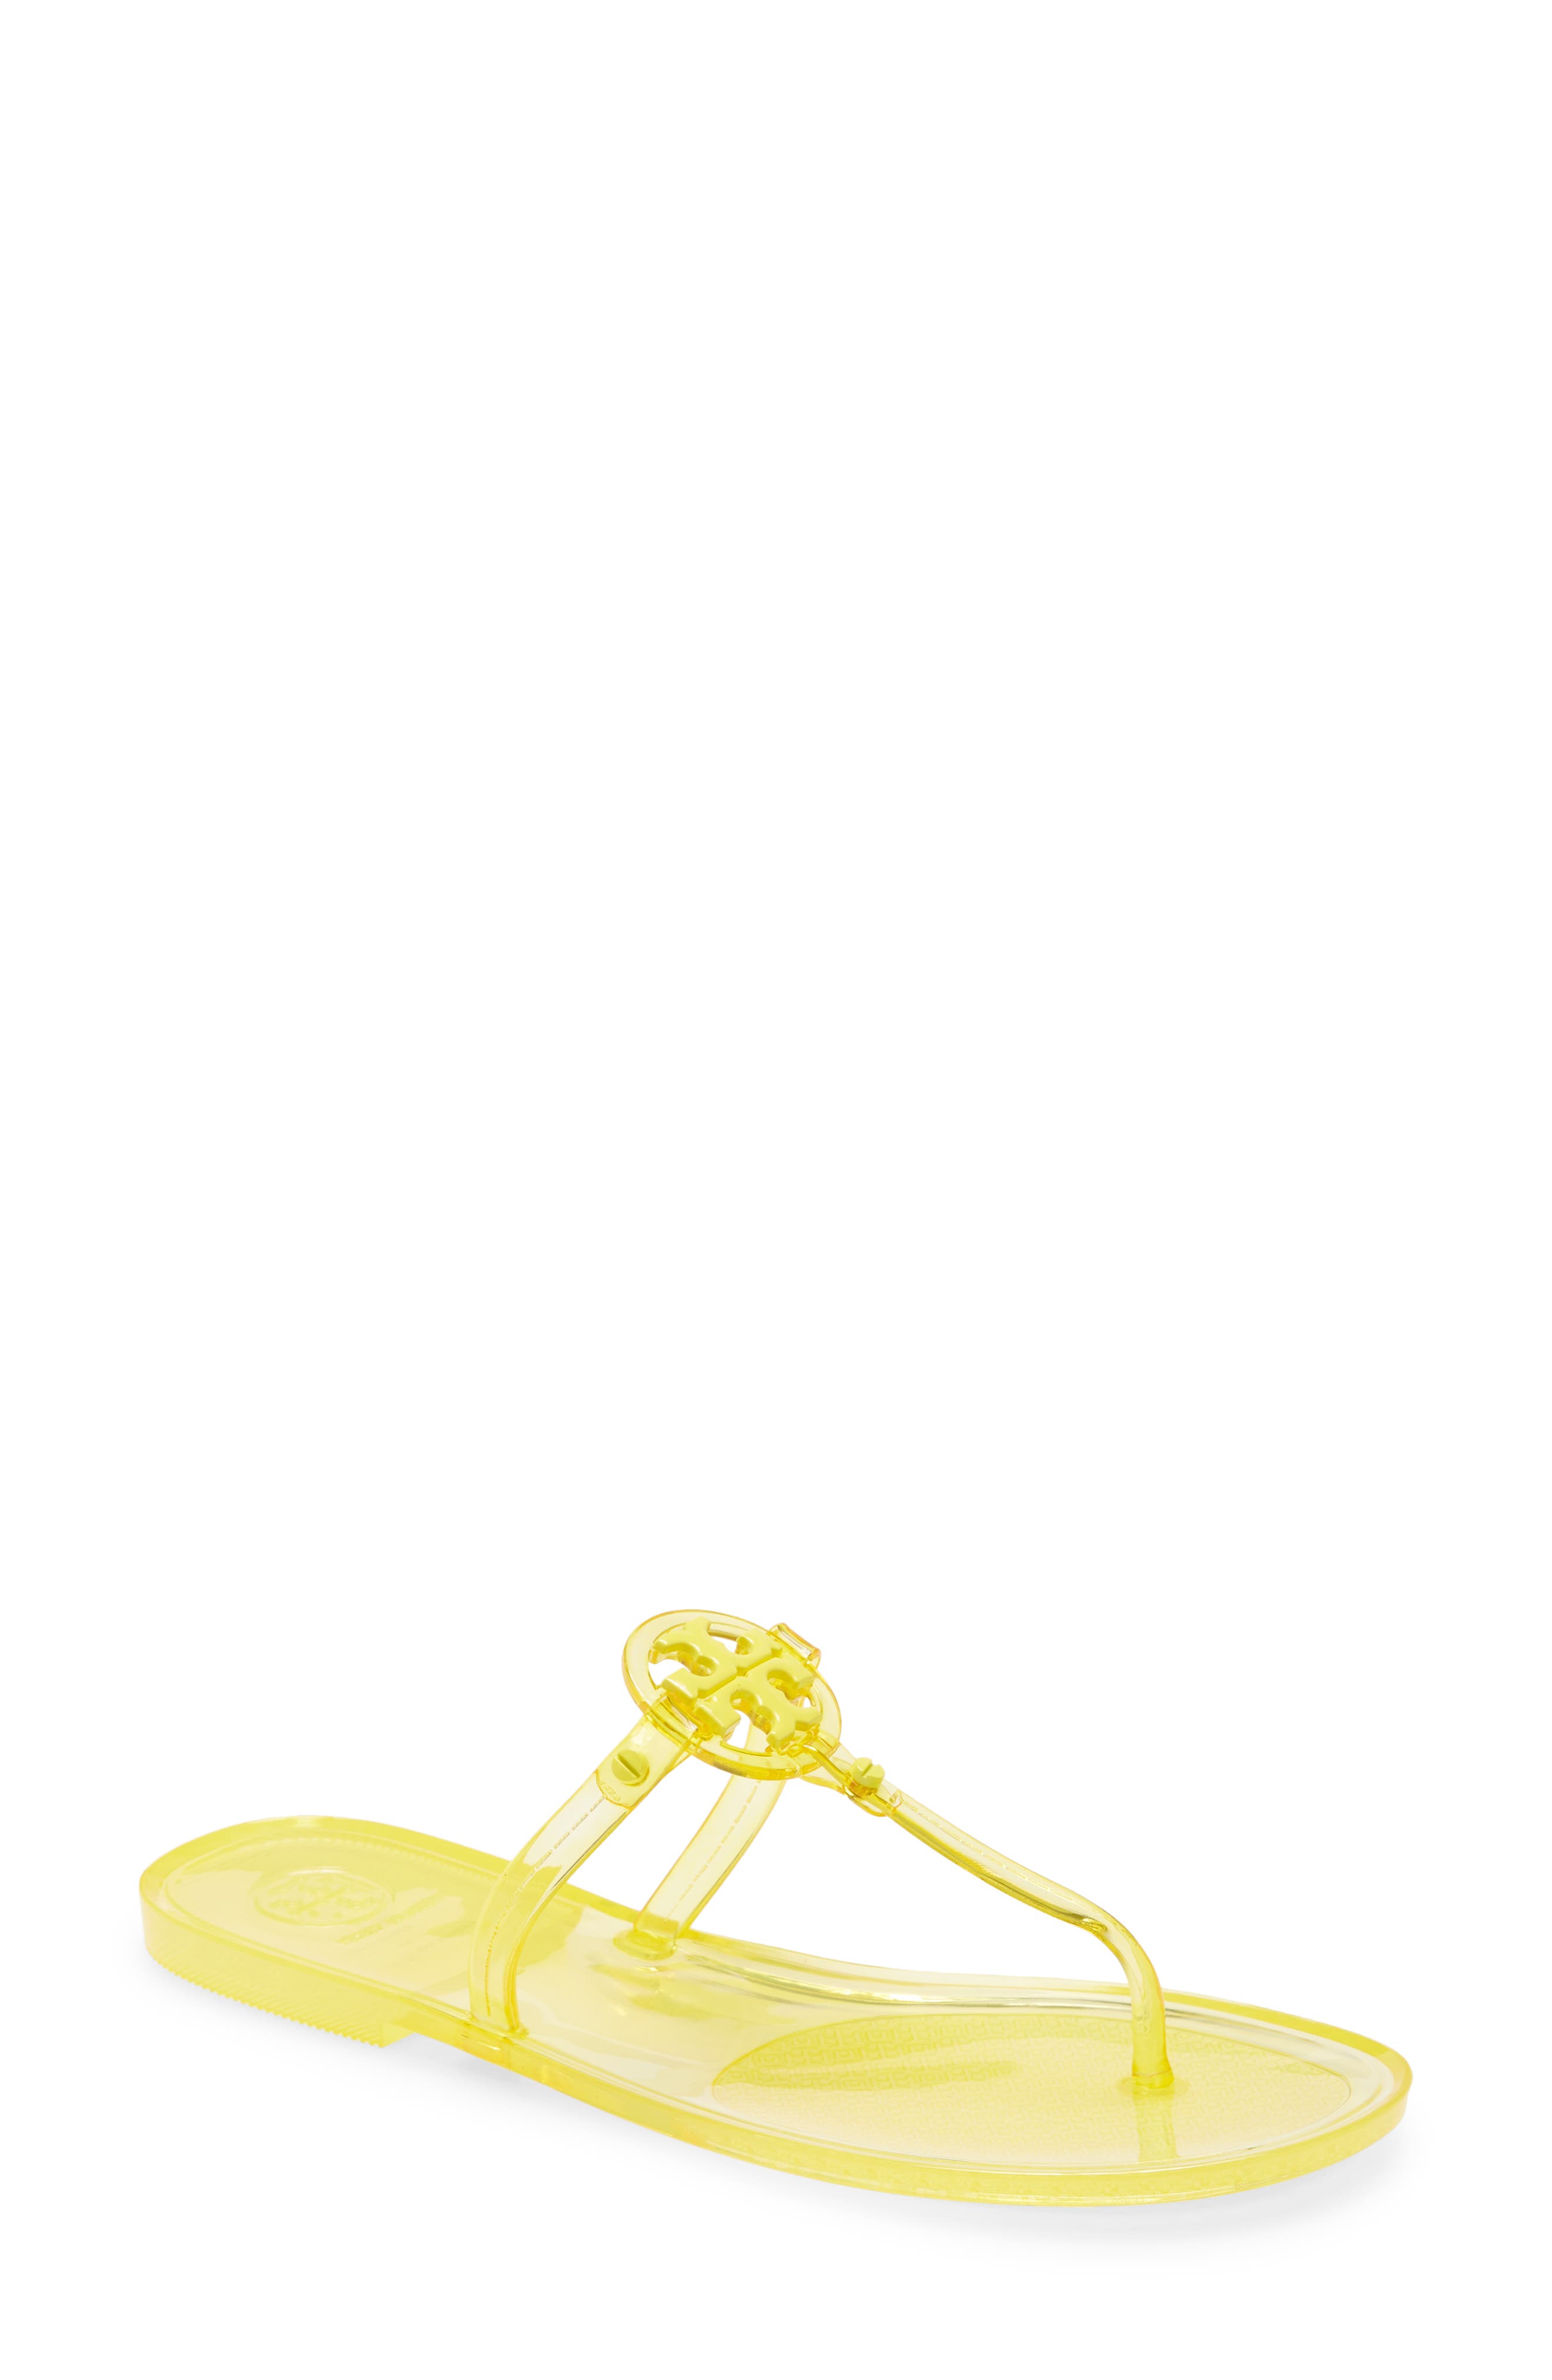 tory burch sandals yellow